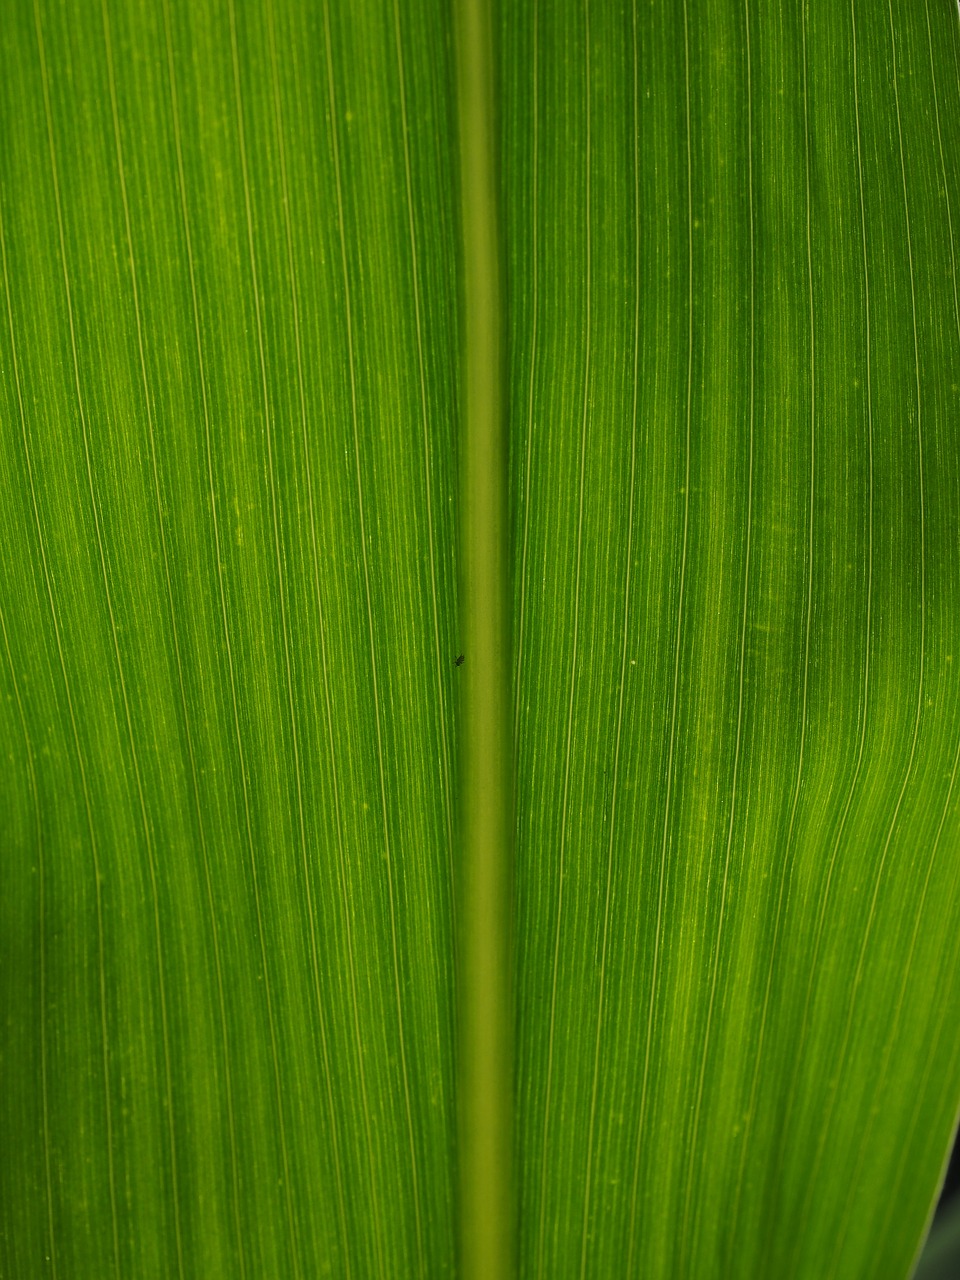 corn leaf detail leaf veins free photo